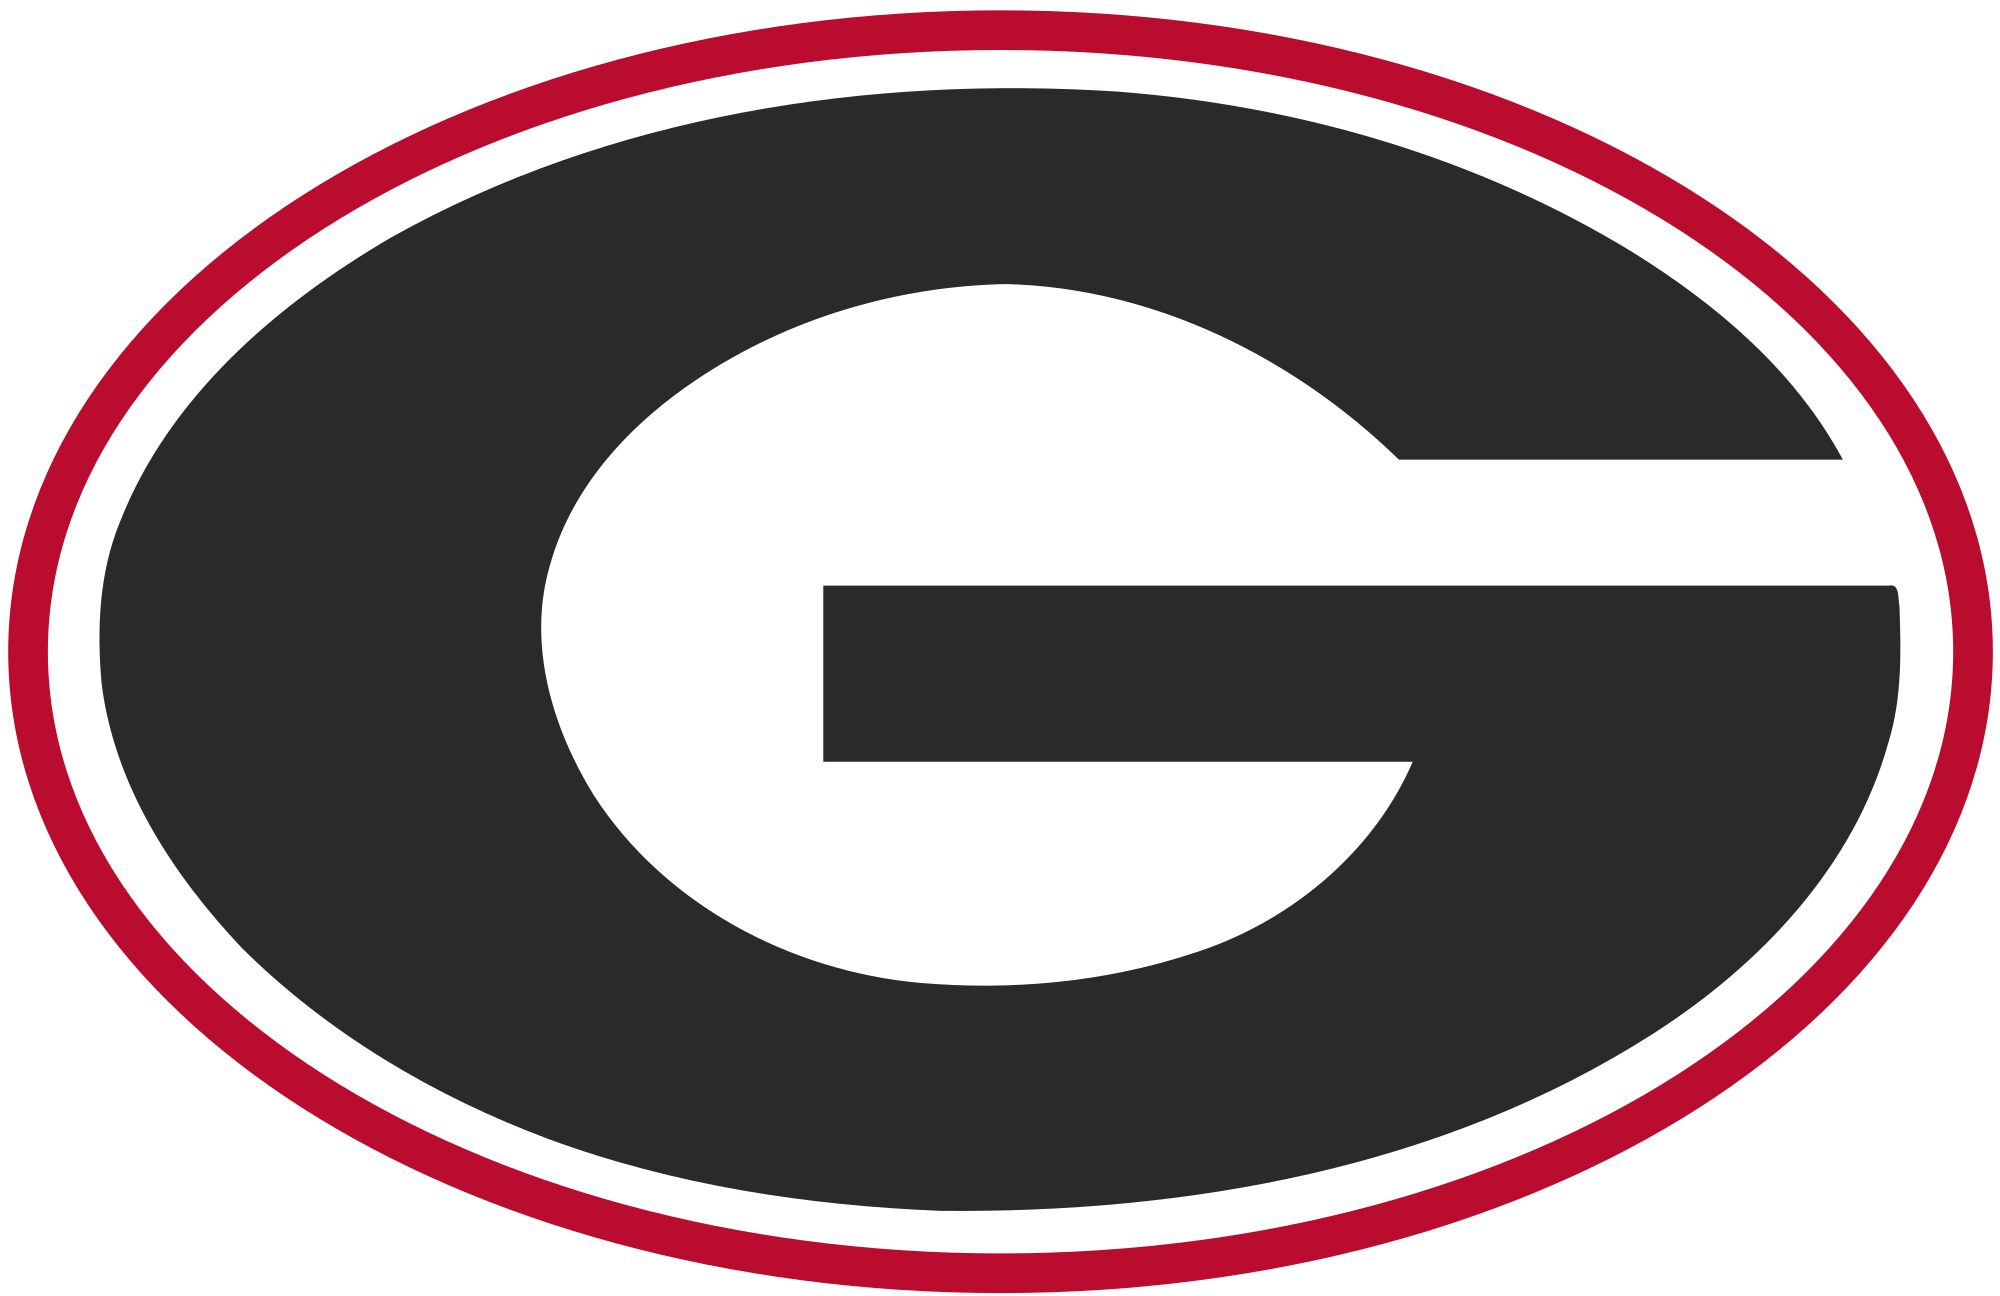 UGA G Logo - Georgia Athletics logo.svg